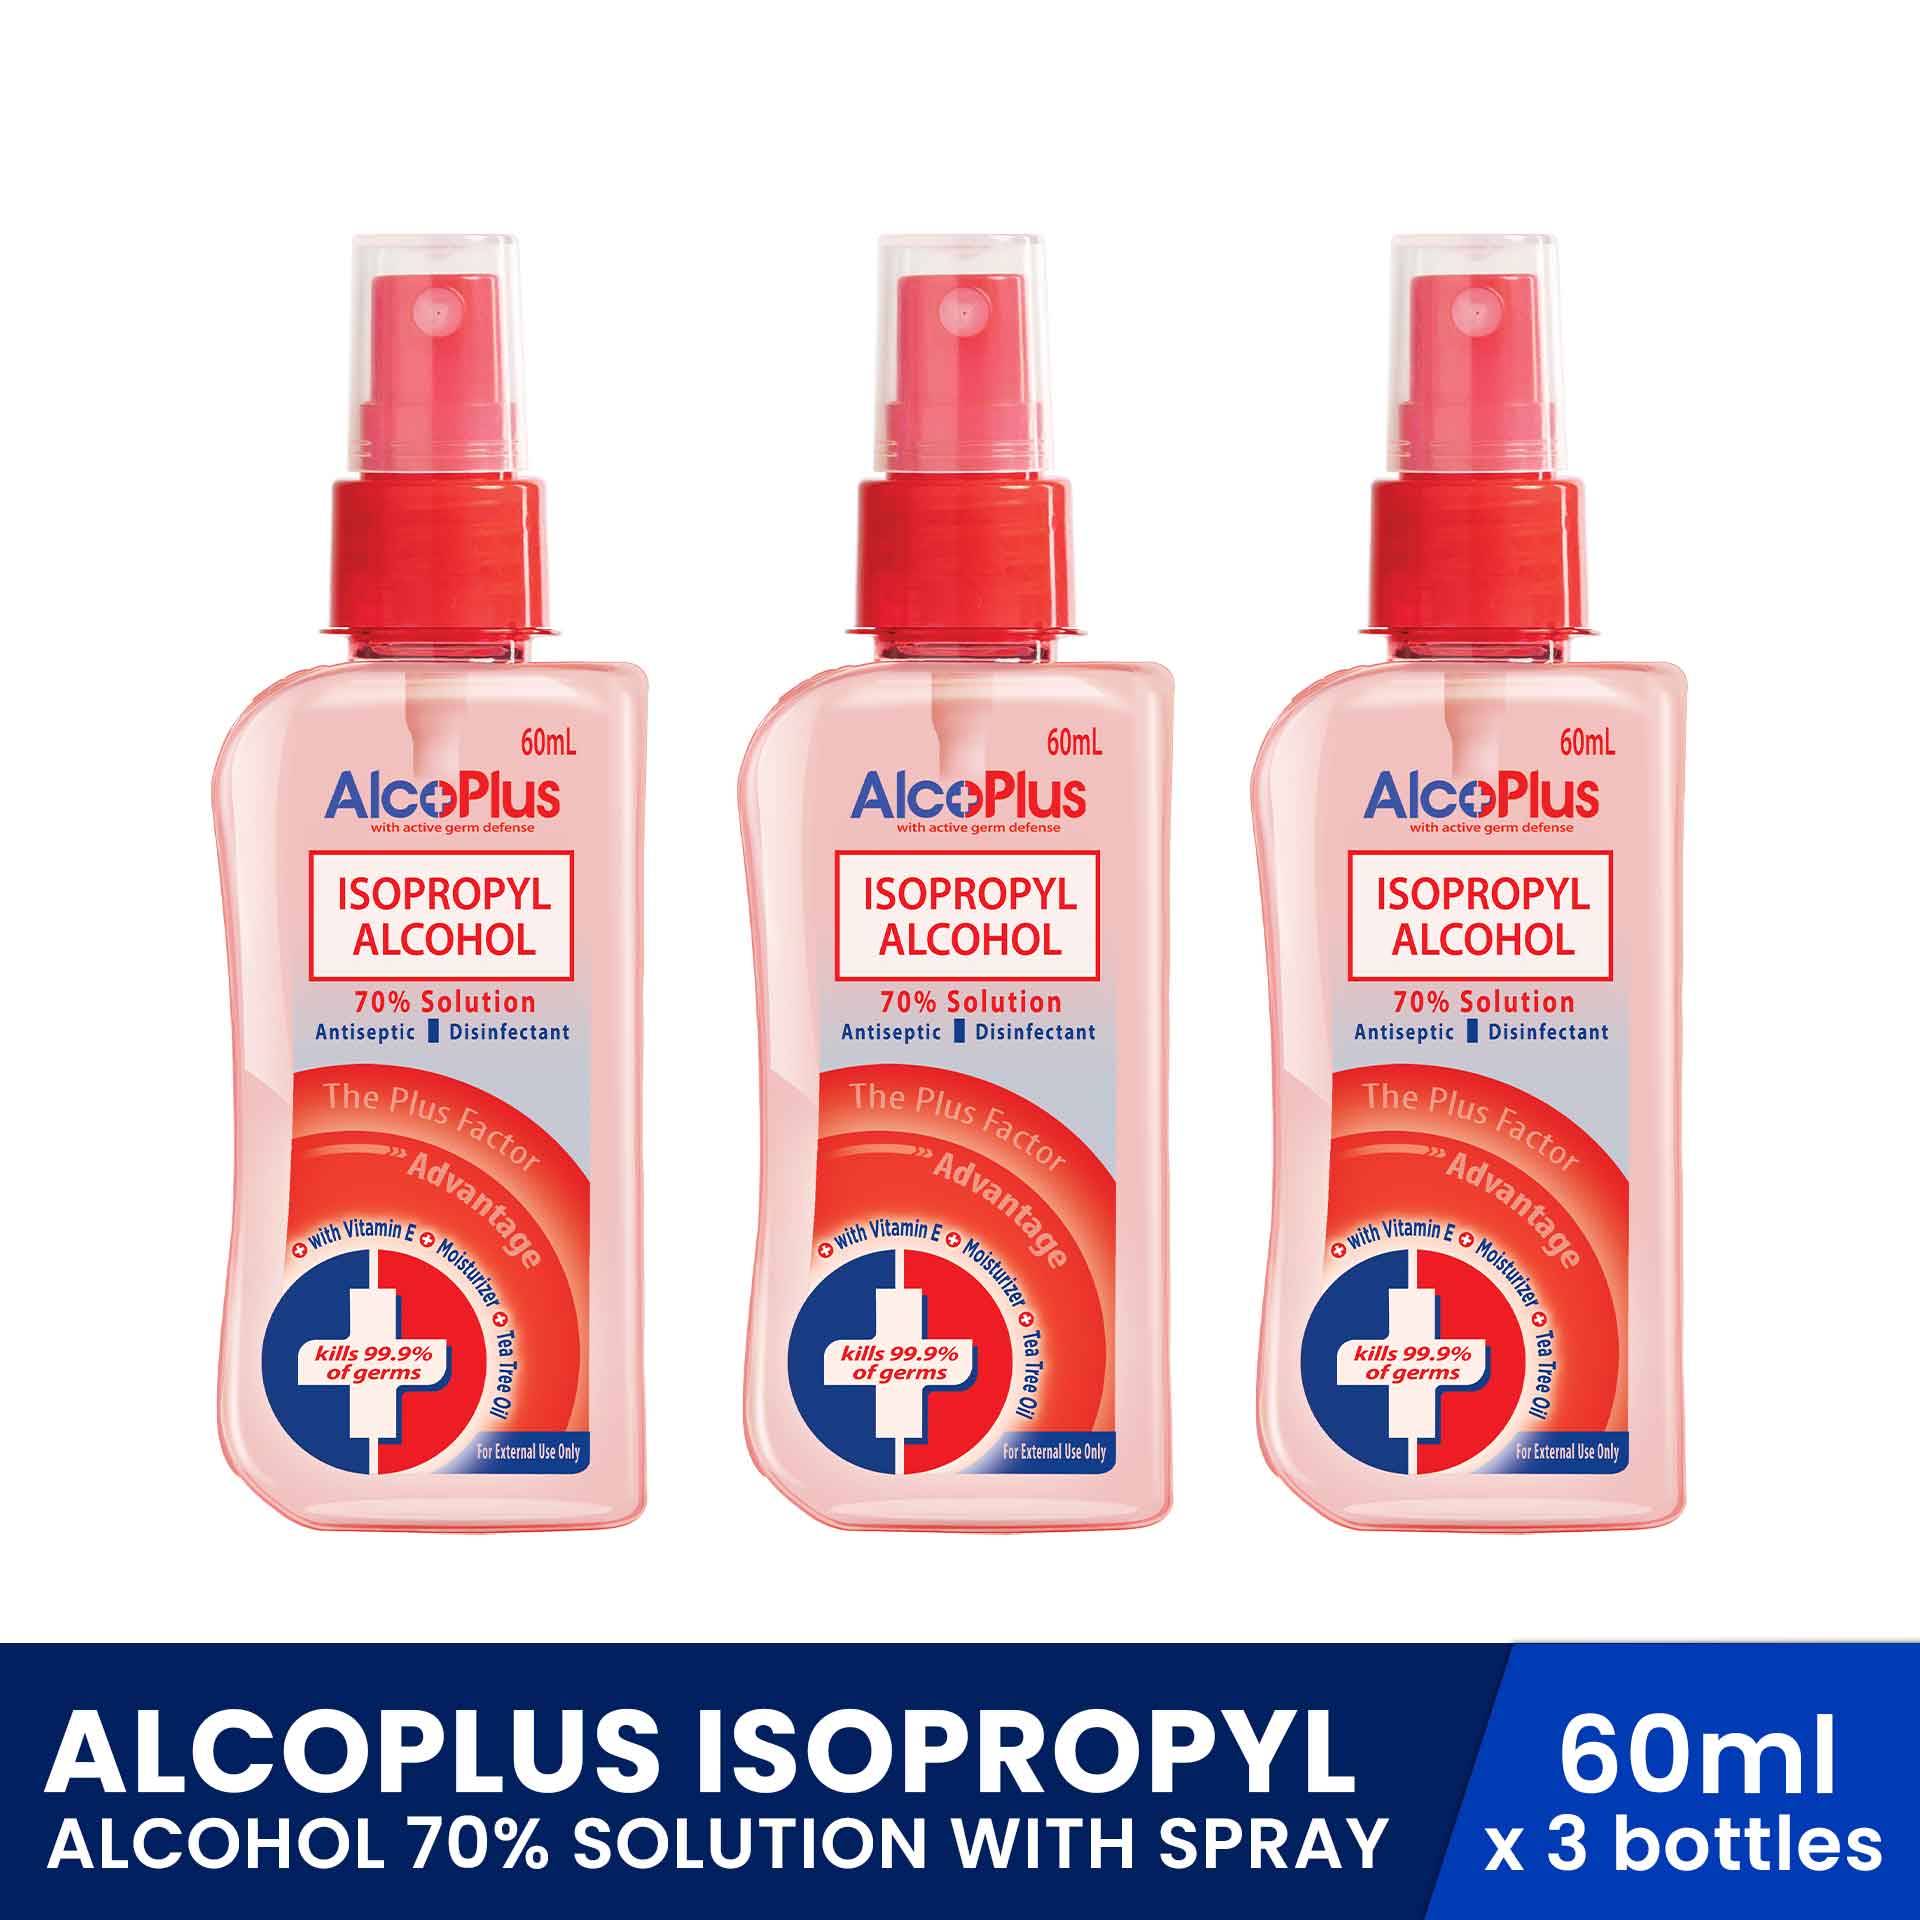 Alcoplus 70% Isopropyl Alcohol 500Ml